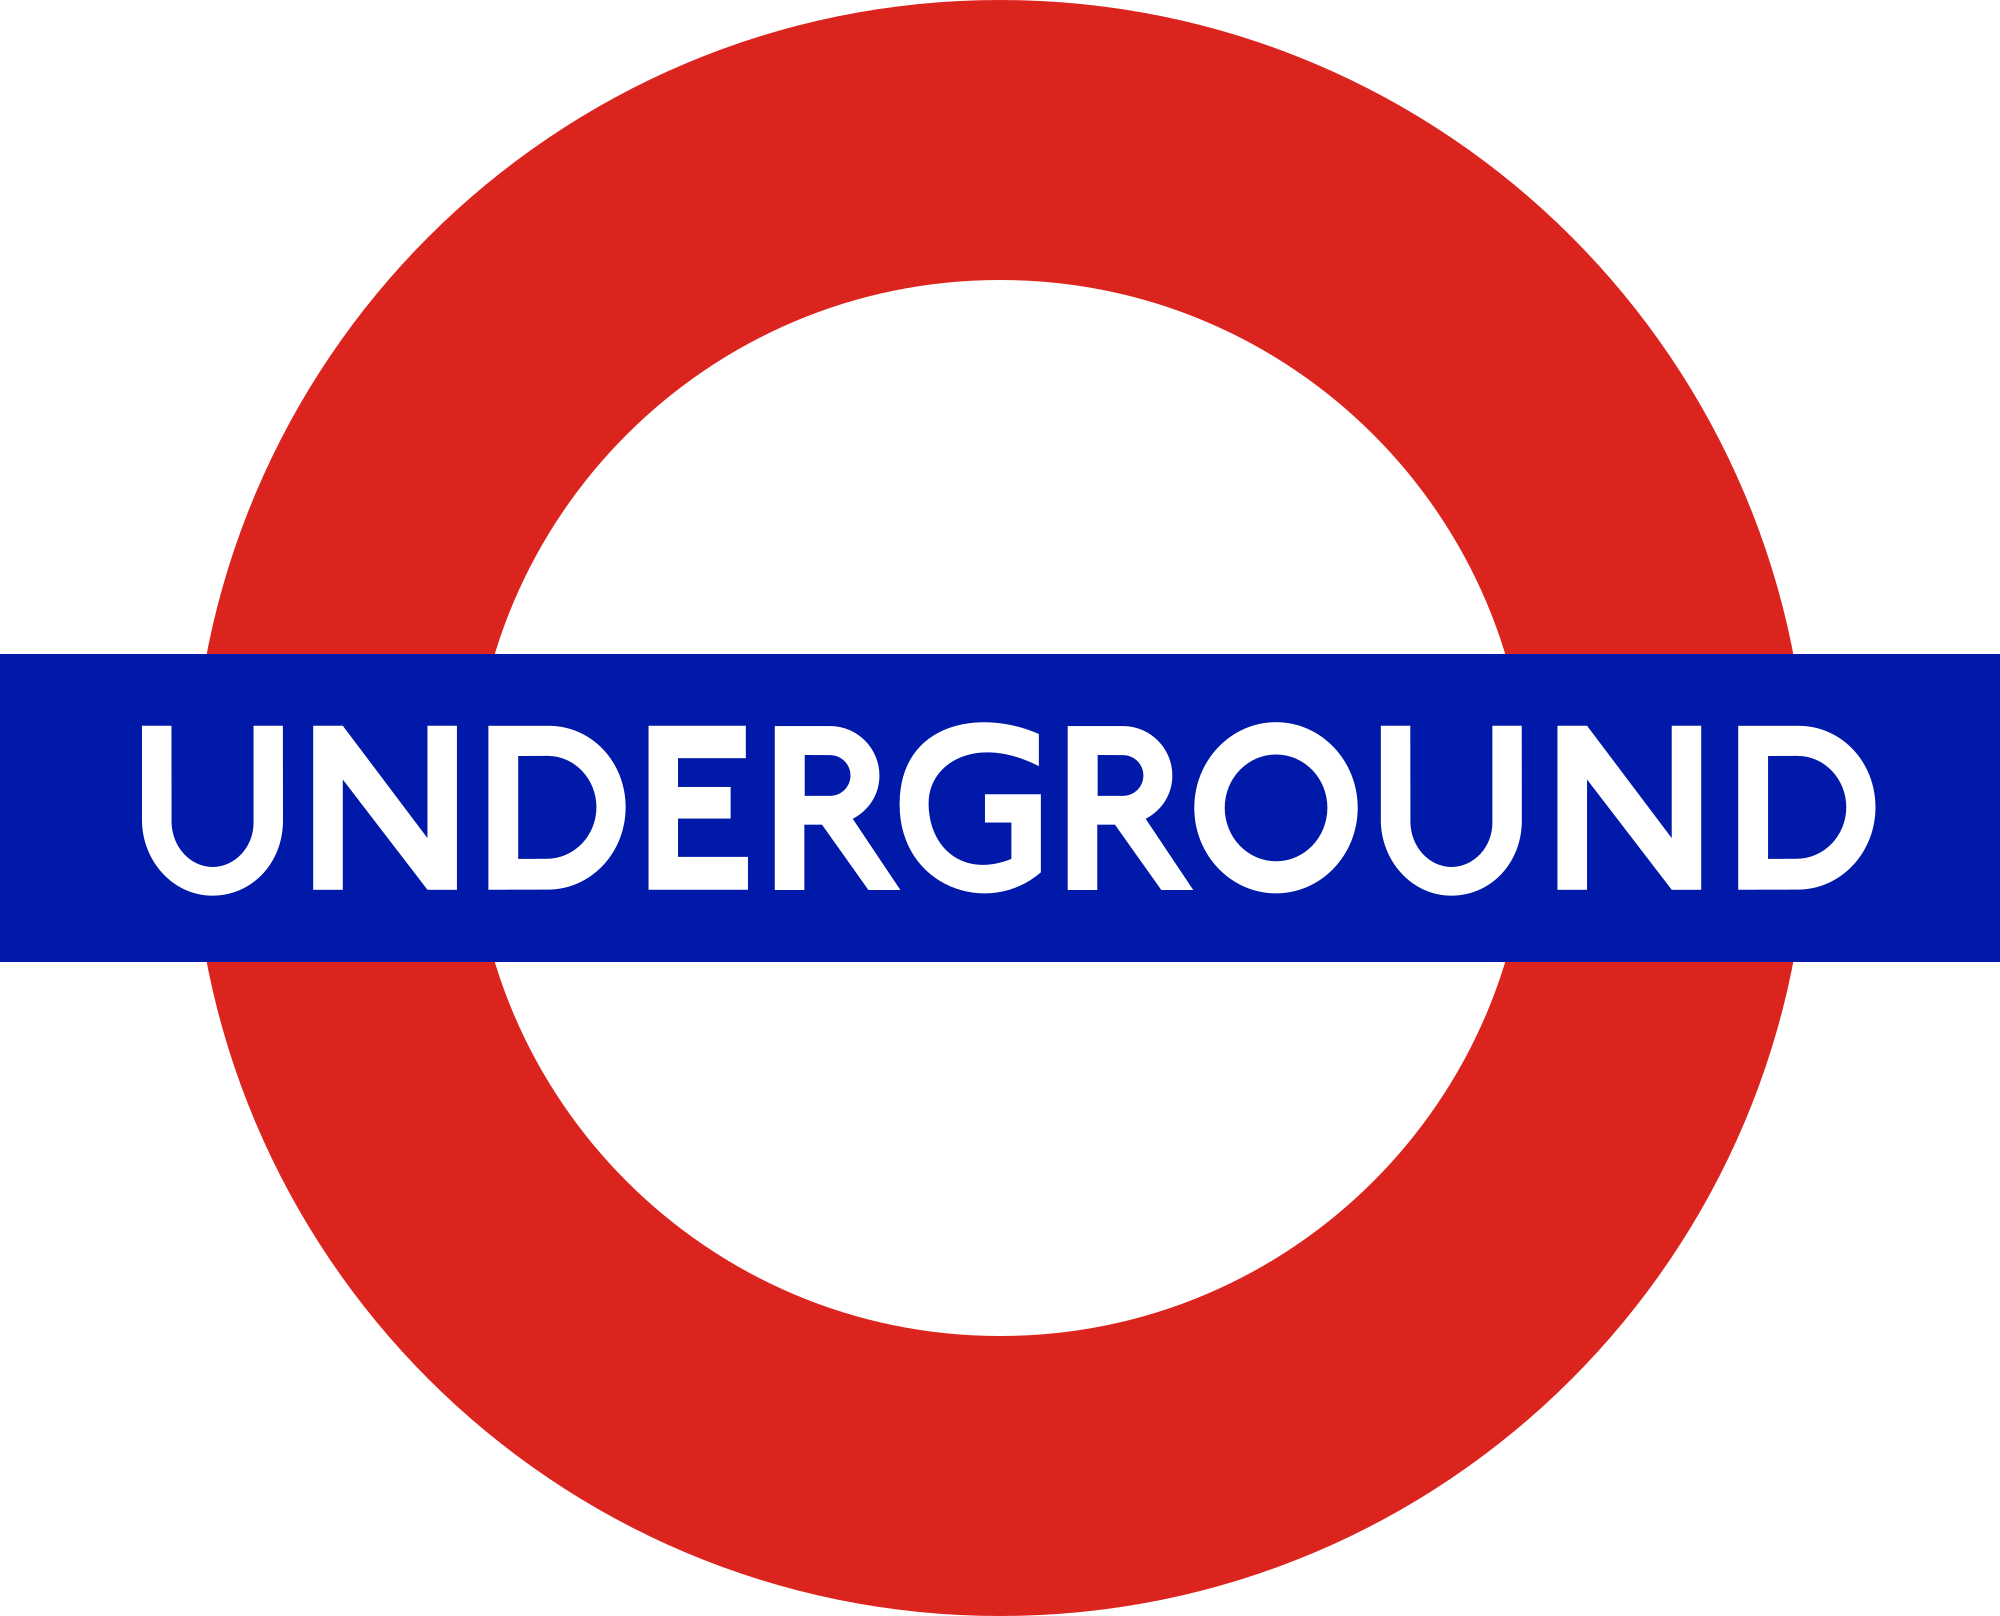 London’s Underground logo, logotype